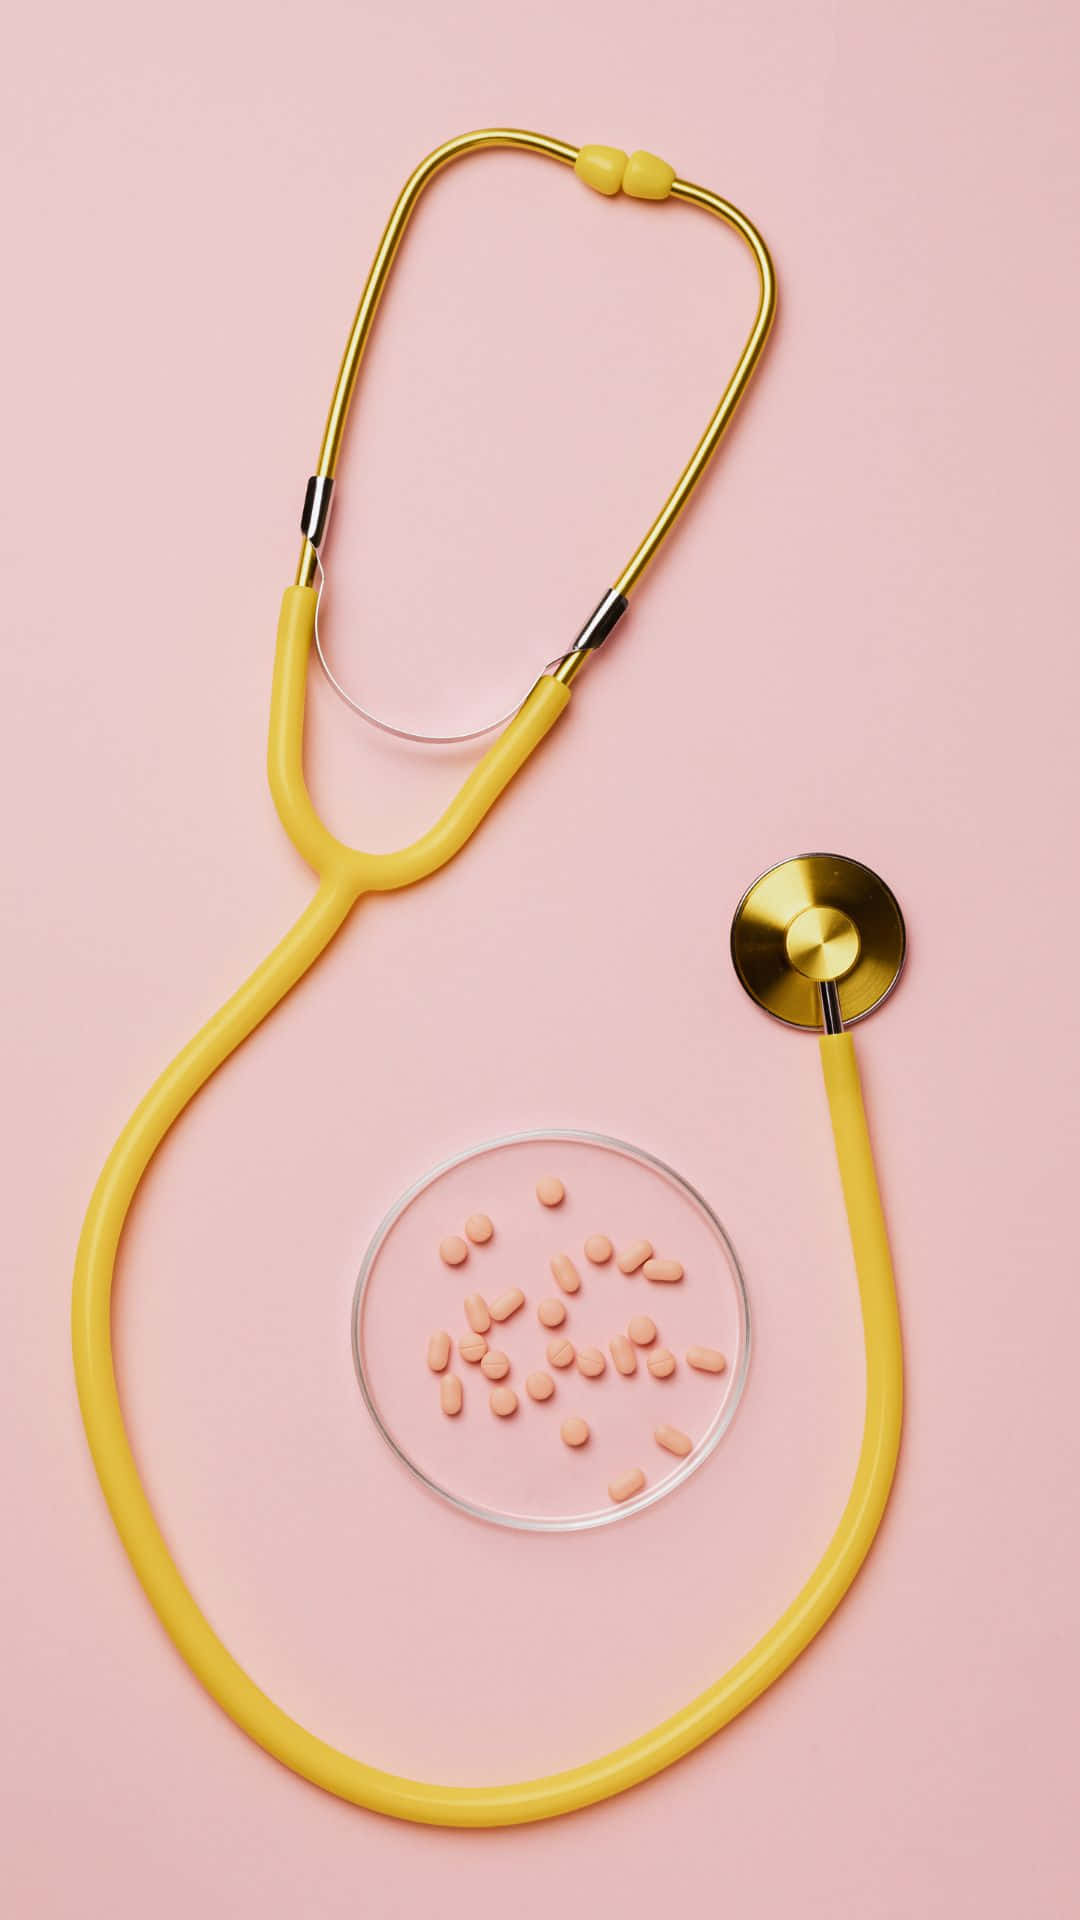 Yellow Stethoscope Pink Pills Pink Background Wallpaper